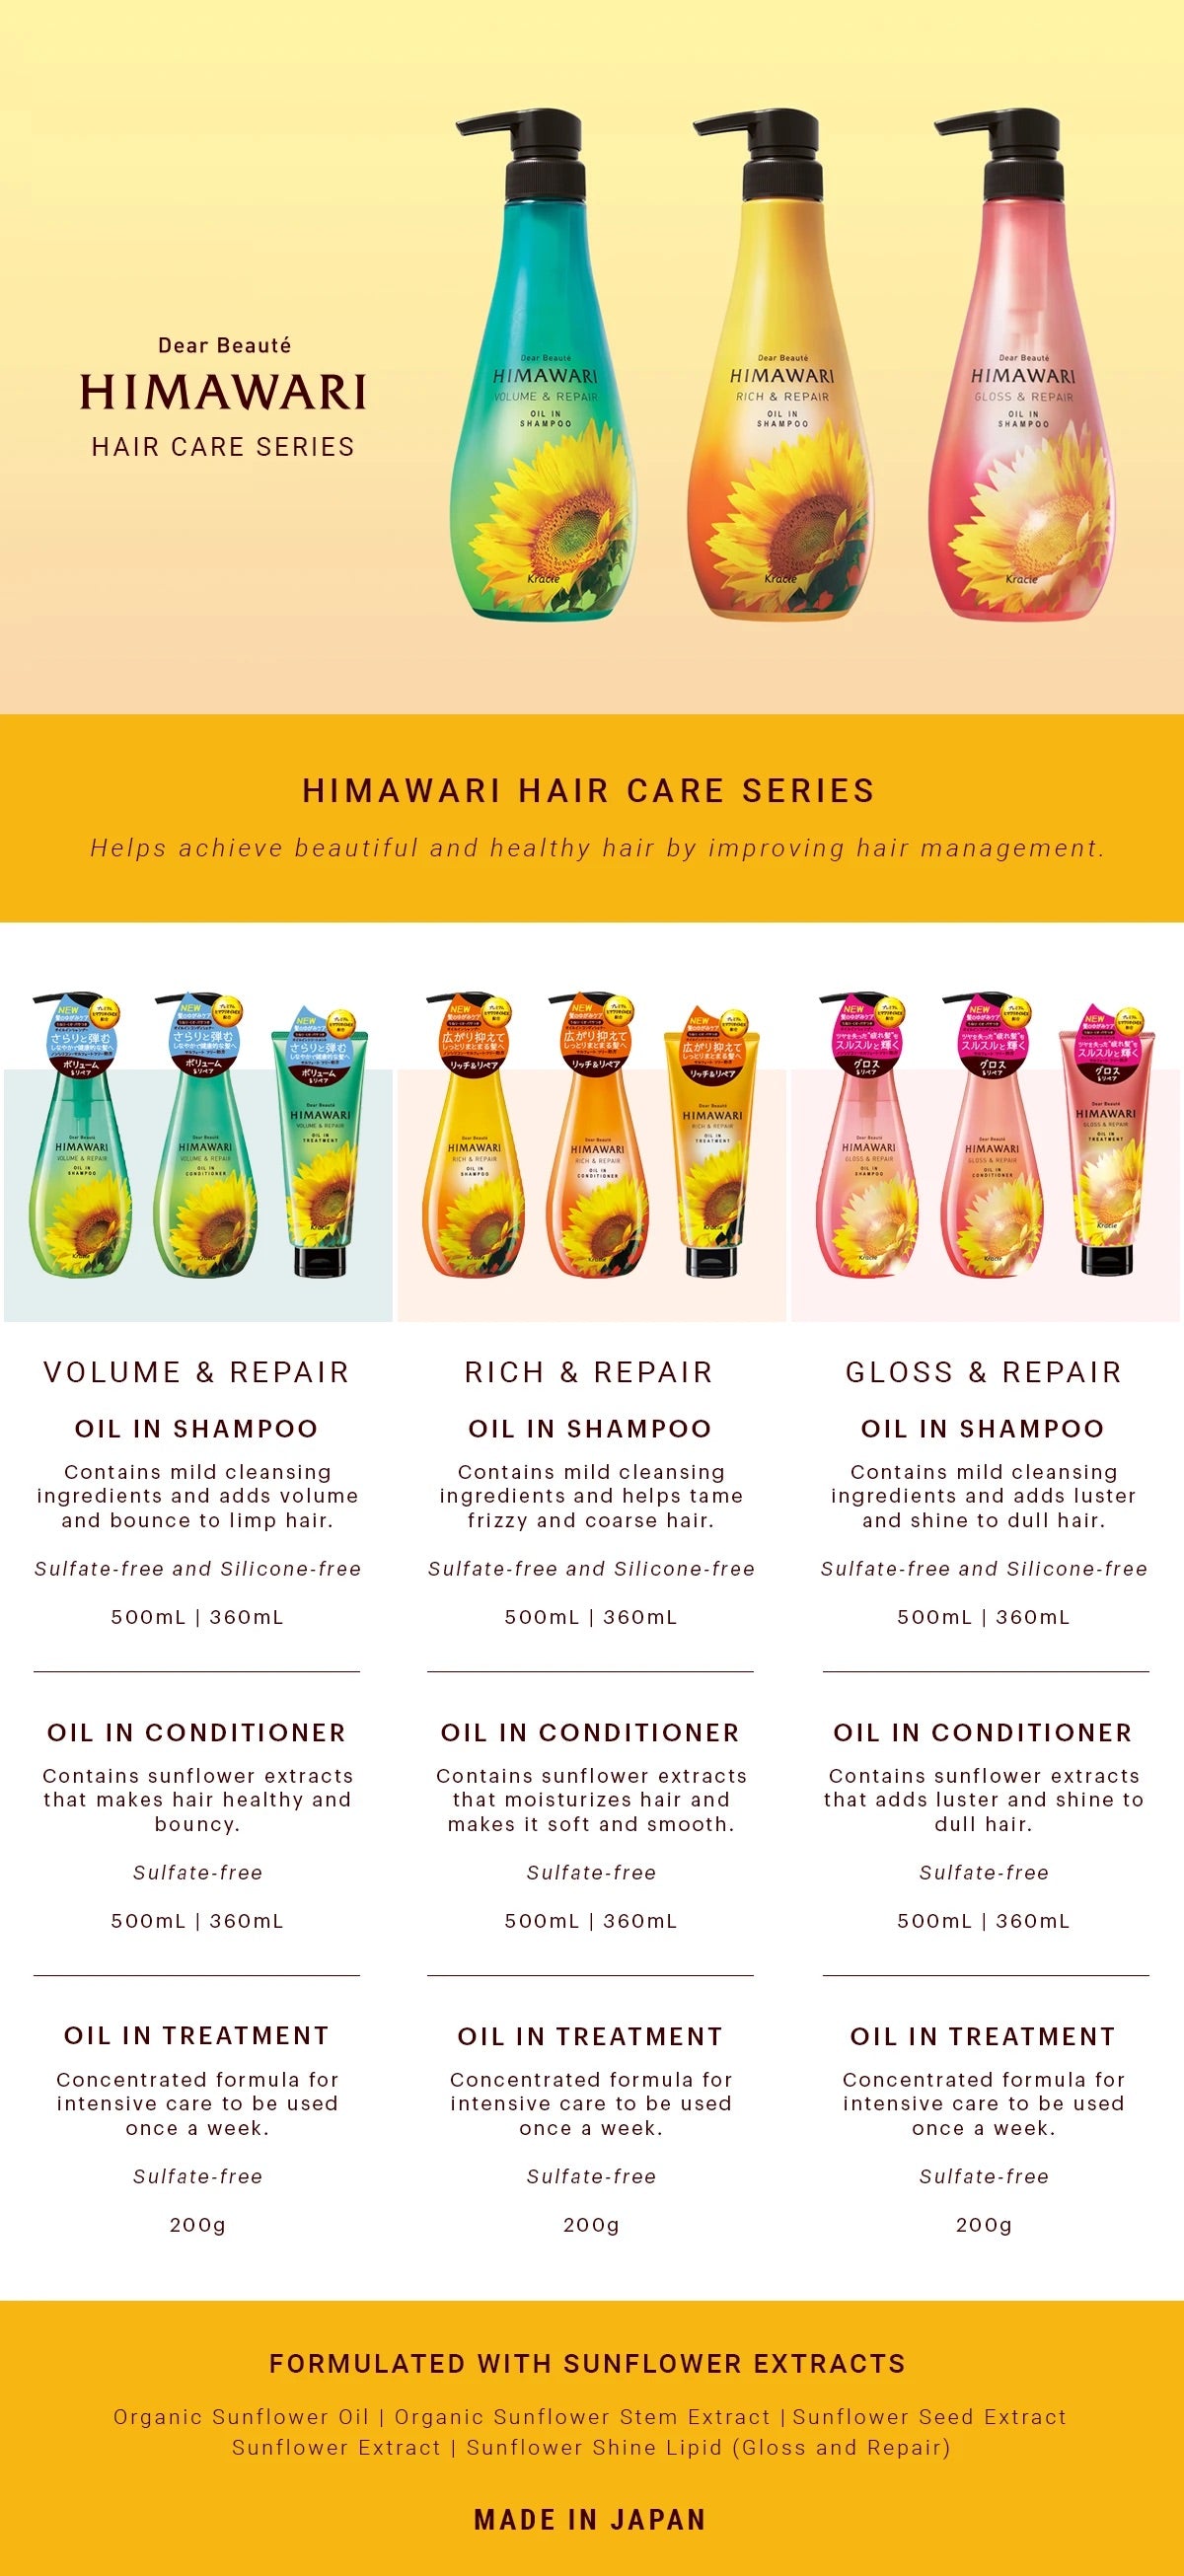 Himawari Dear Beaute Oil in Shampoo Rich & Repair